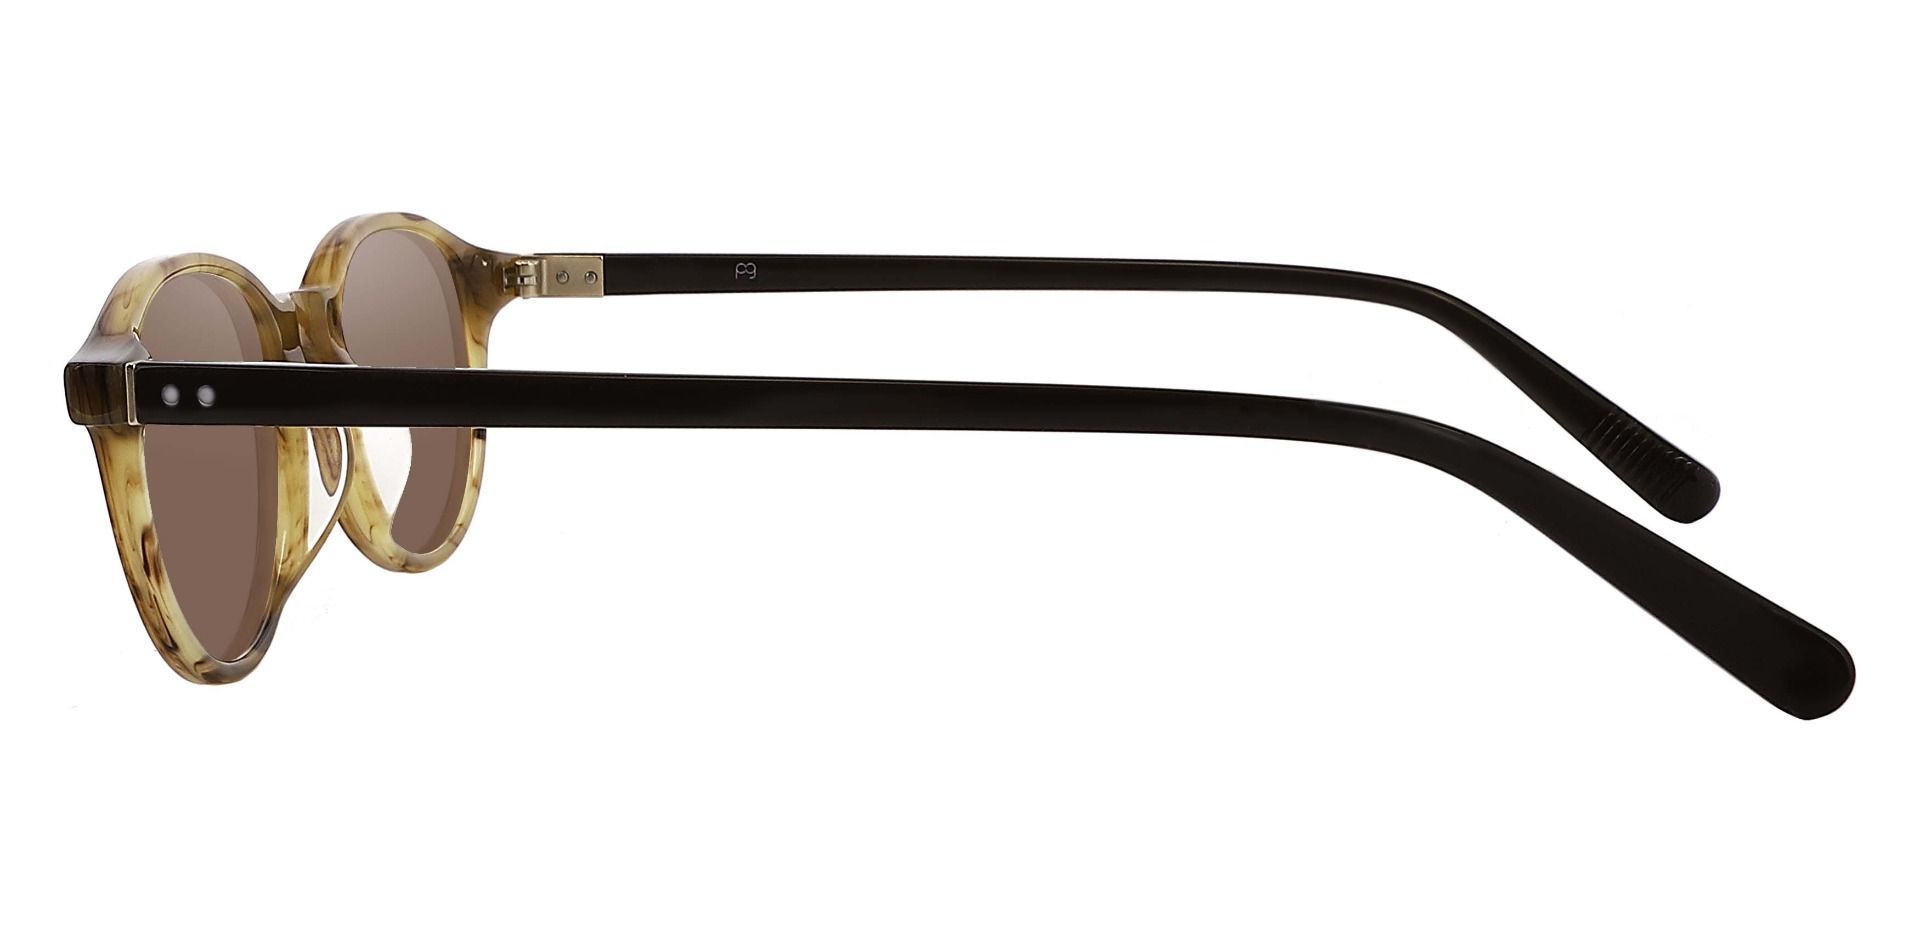 Avon Oval Prescription Sunglasses - Brown Frame With Brown Lenses